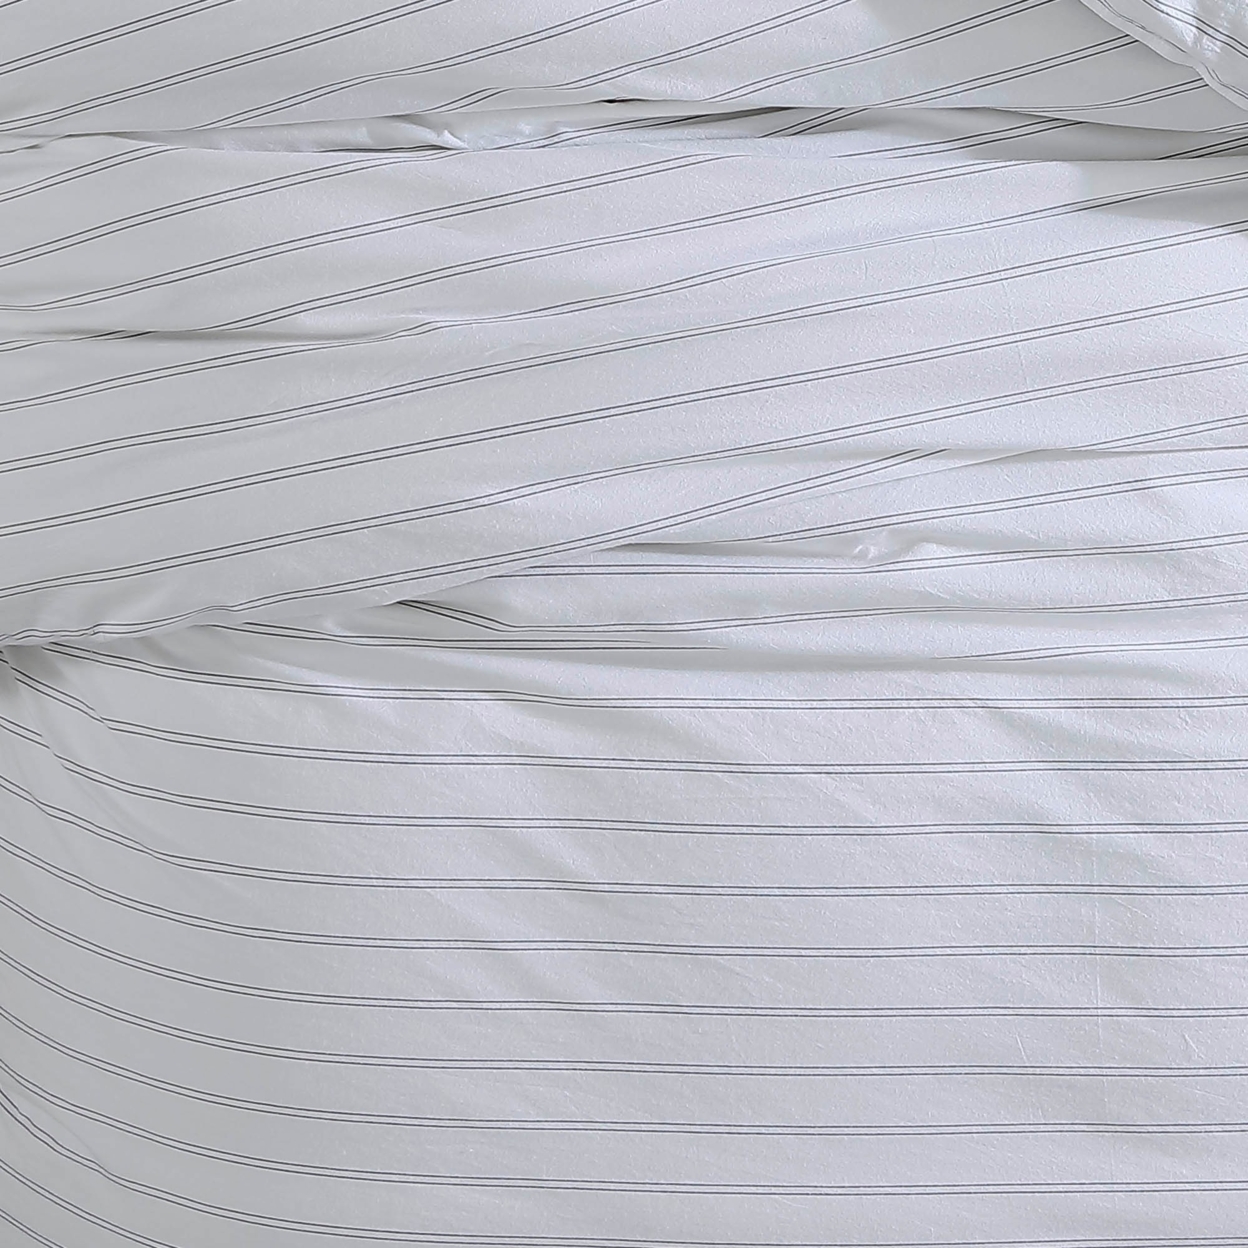 3 Piece King Comforter Set With Pinstripe Pattern, White And Black- Saltoro Sherpi